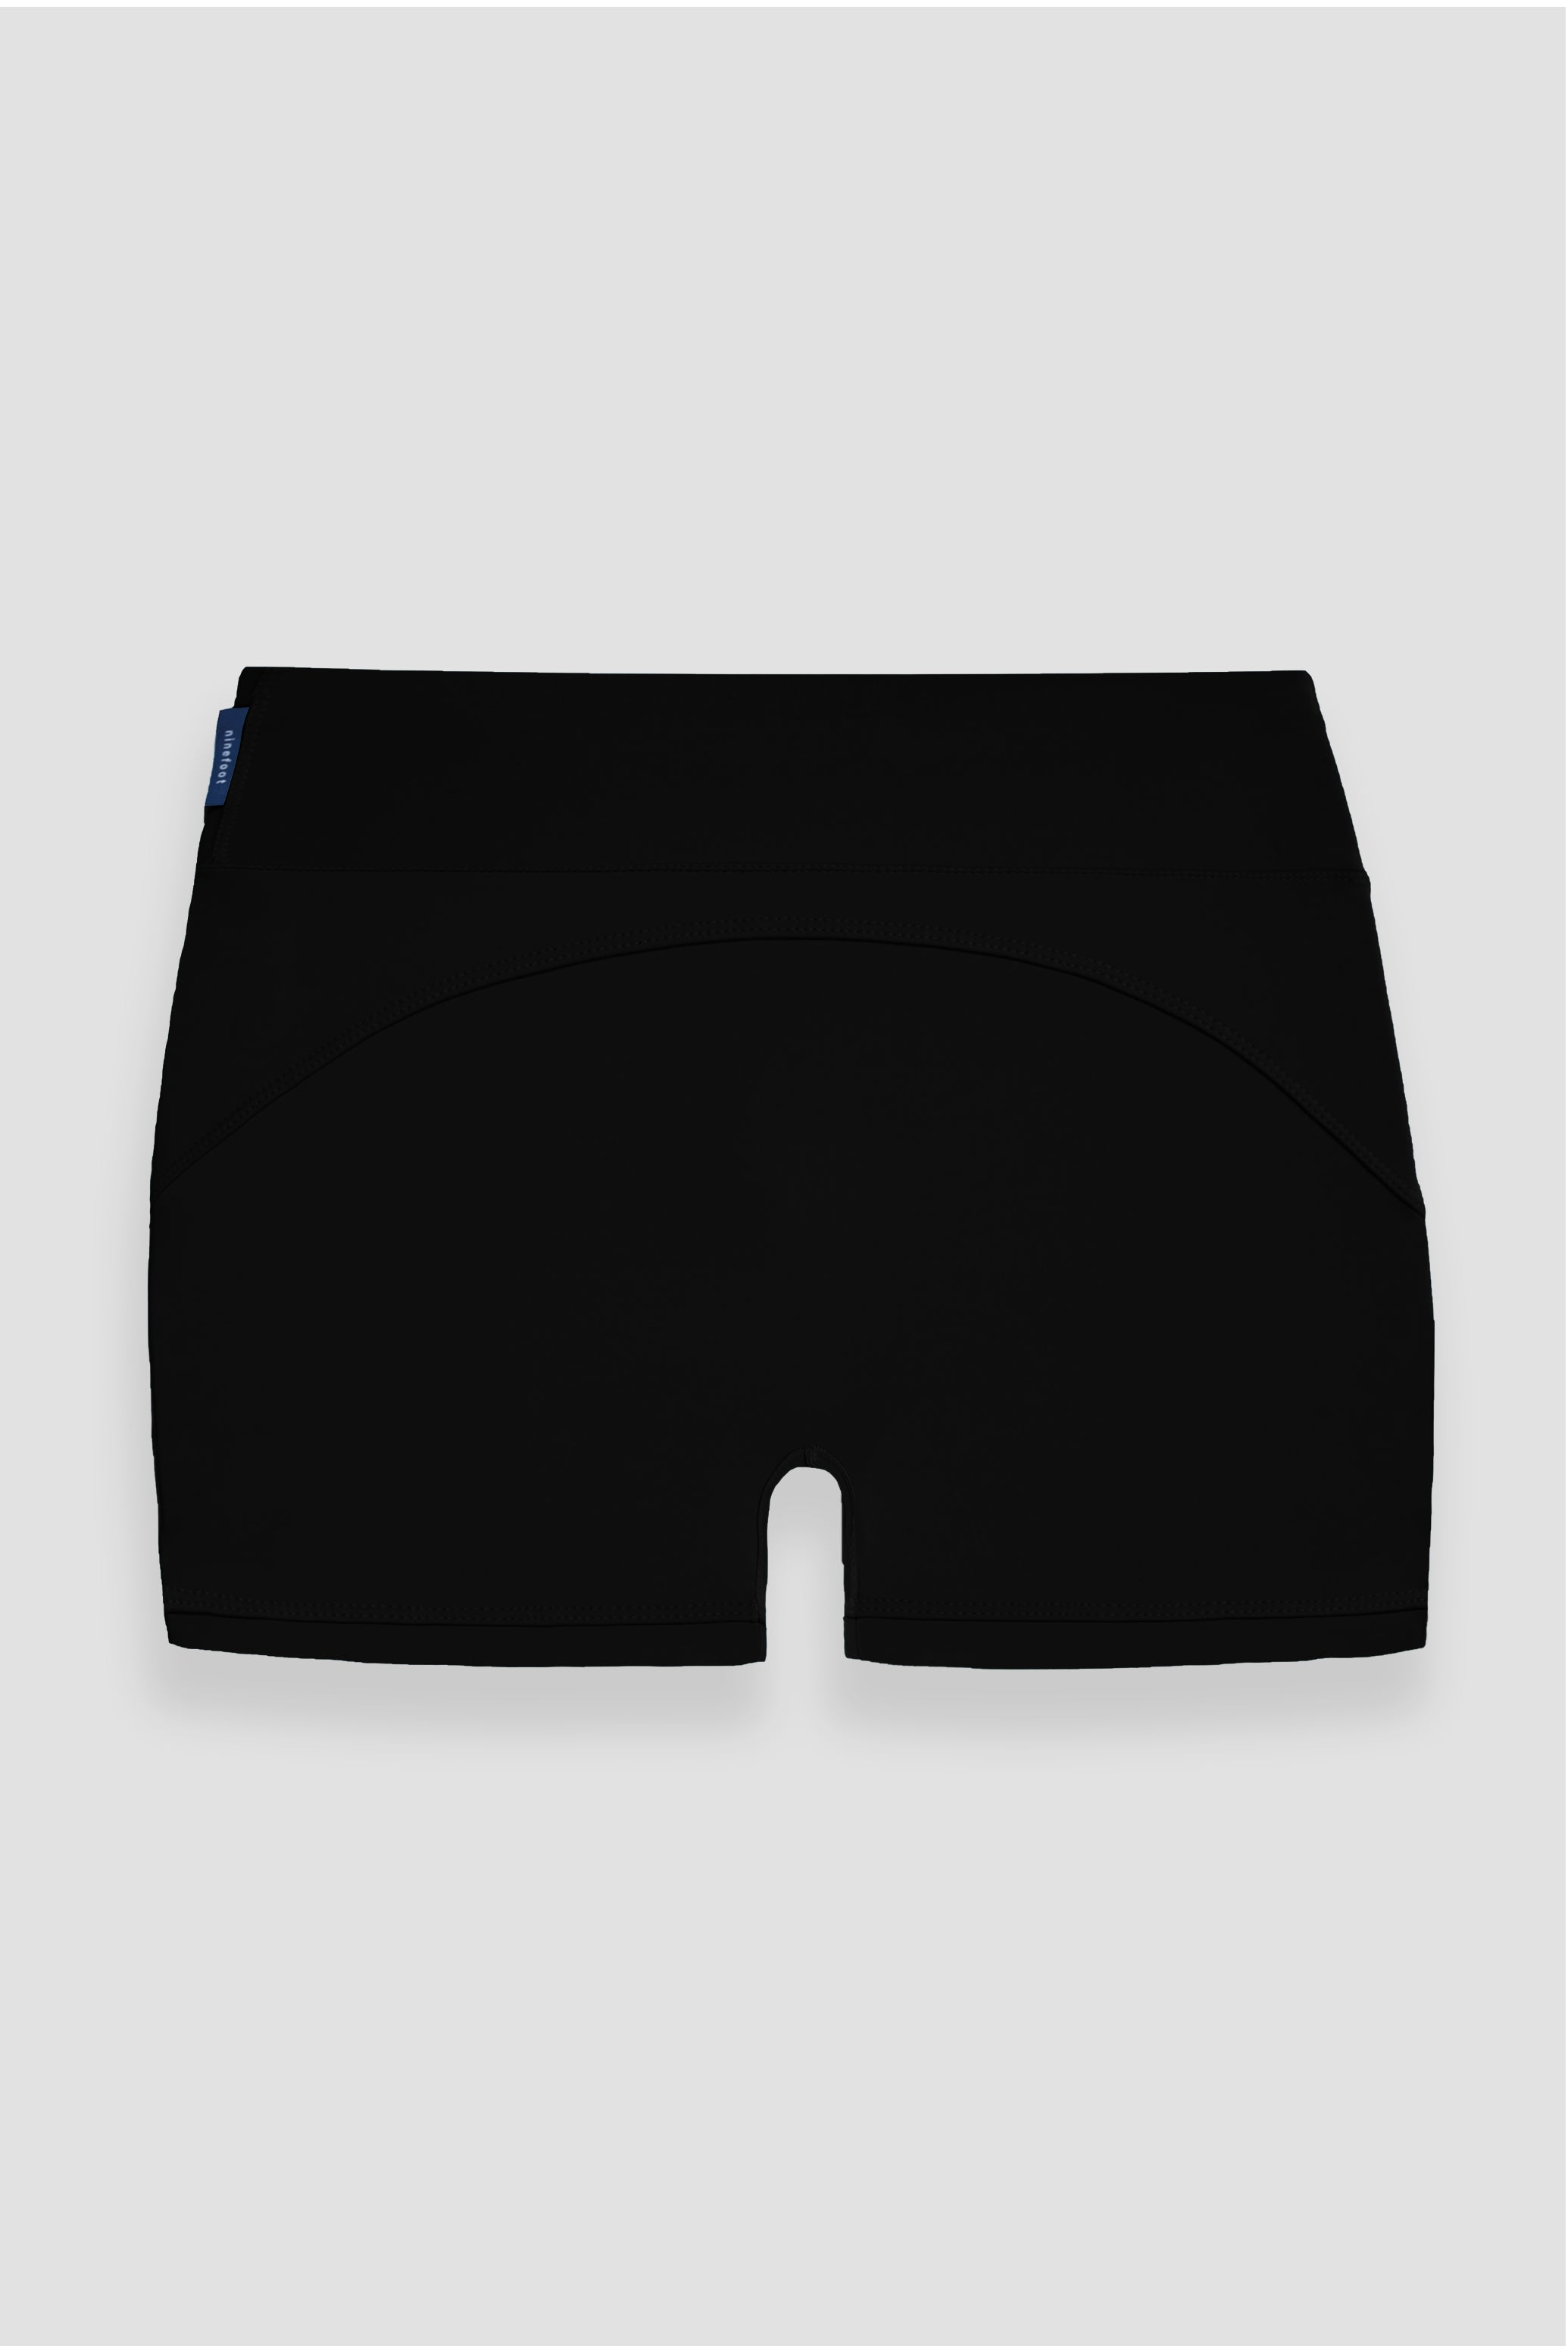 Ninefoot Studio Gerupuk Shorts in Black | One piece